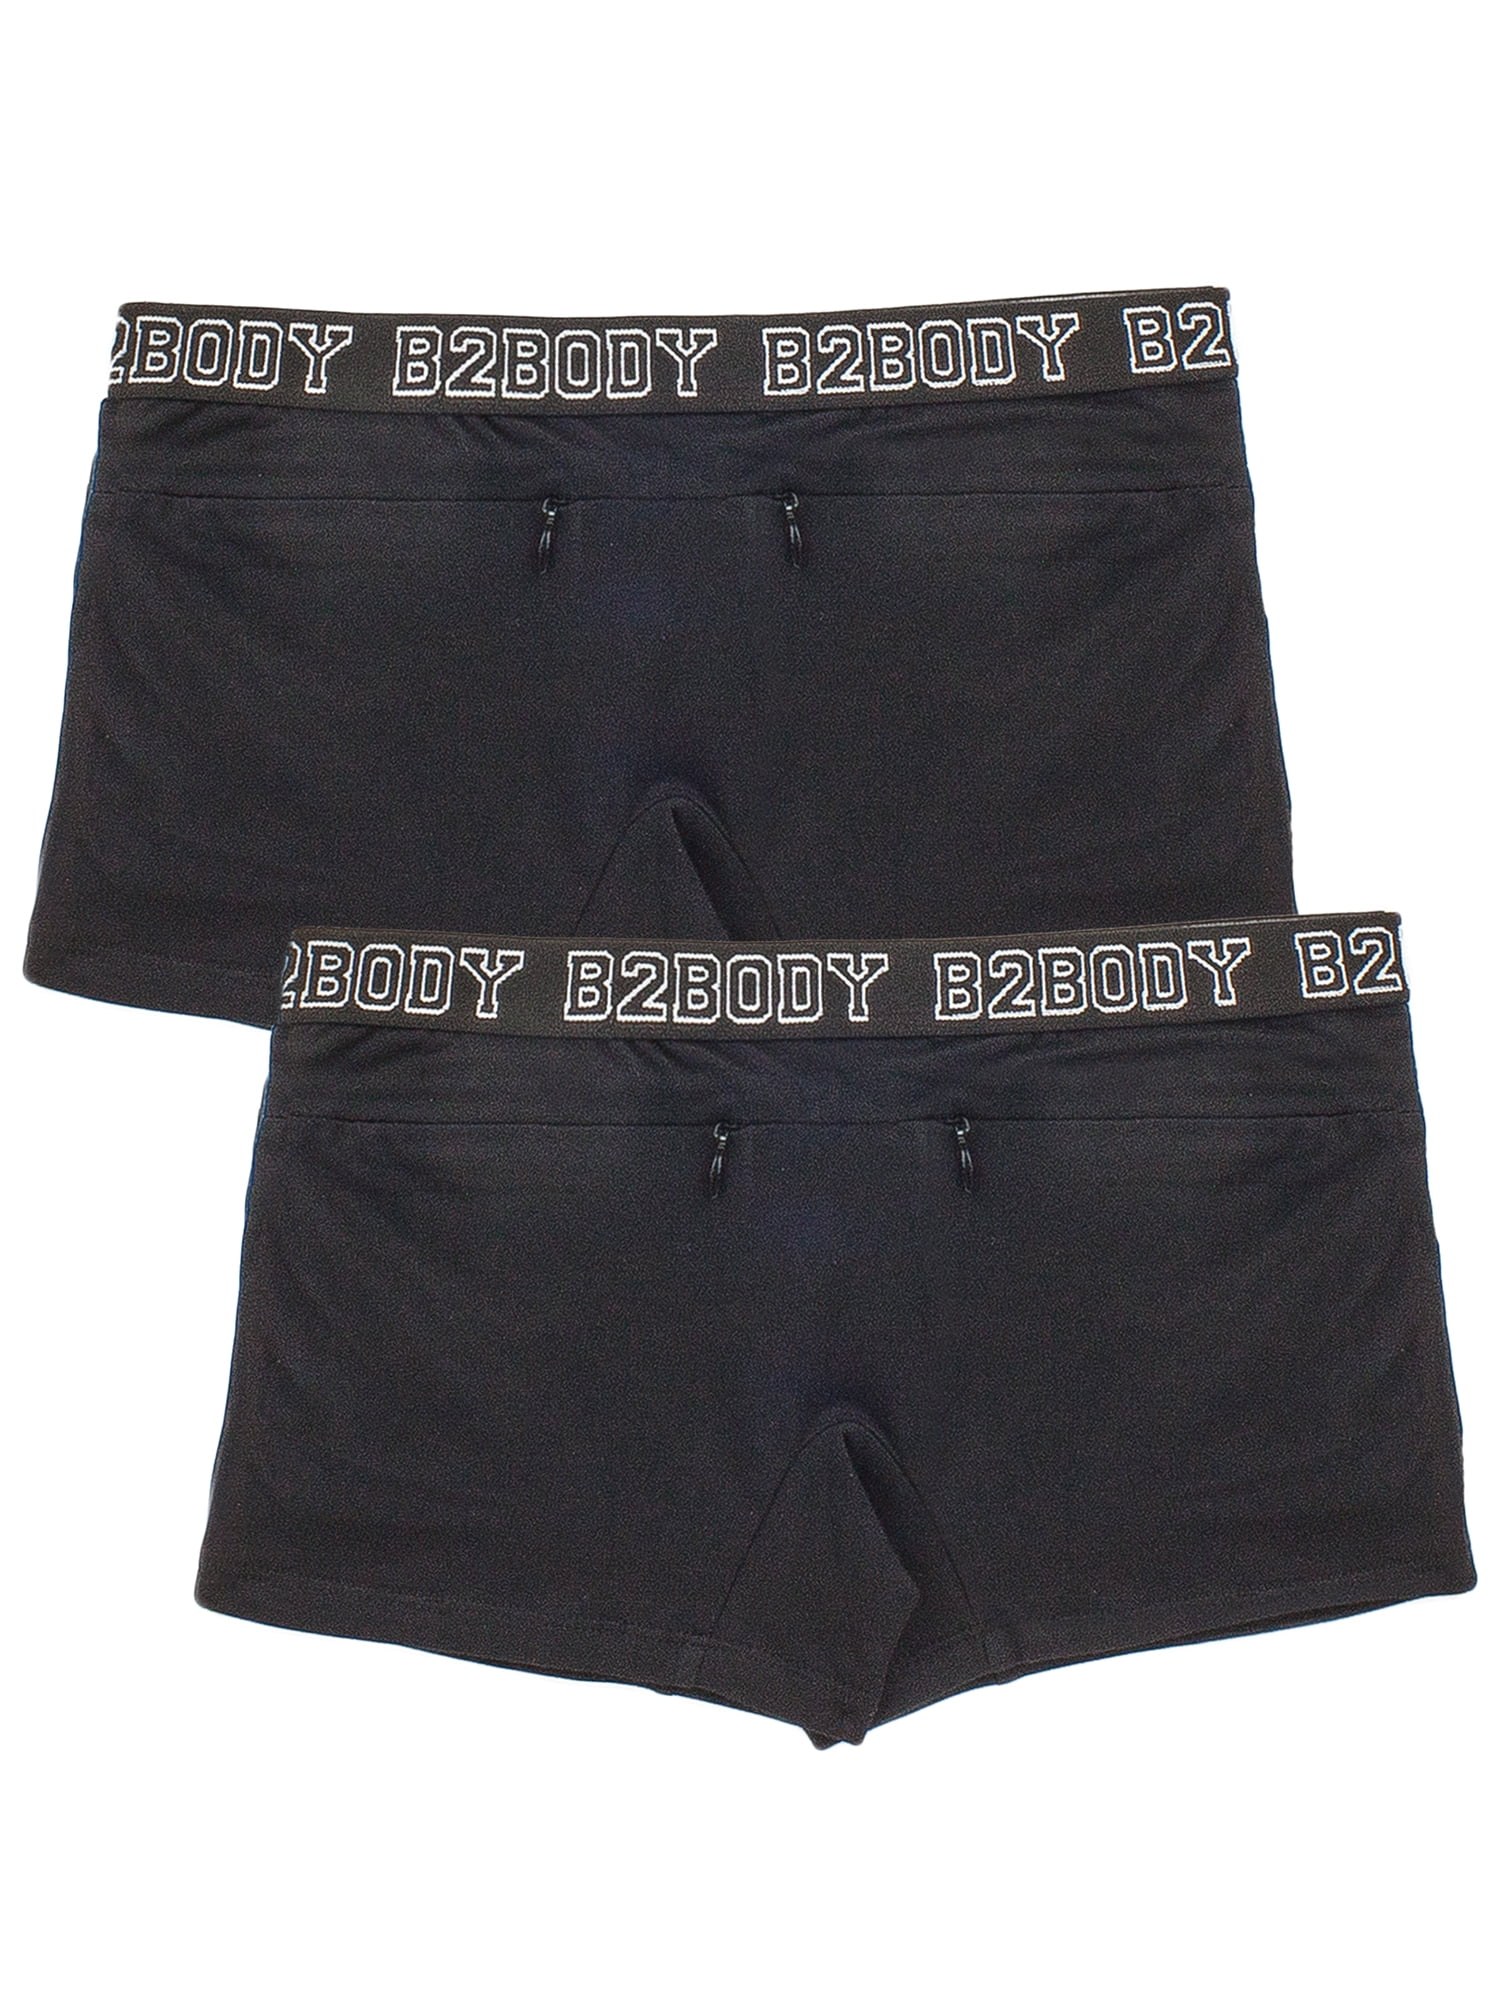 B2BODY - B2BODY Women's Cotton Panties with Pocket Stash Small to Plus 